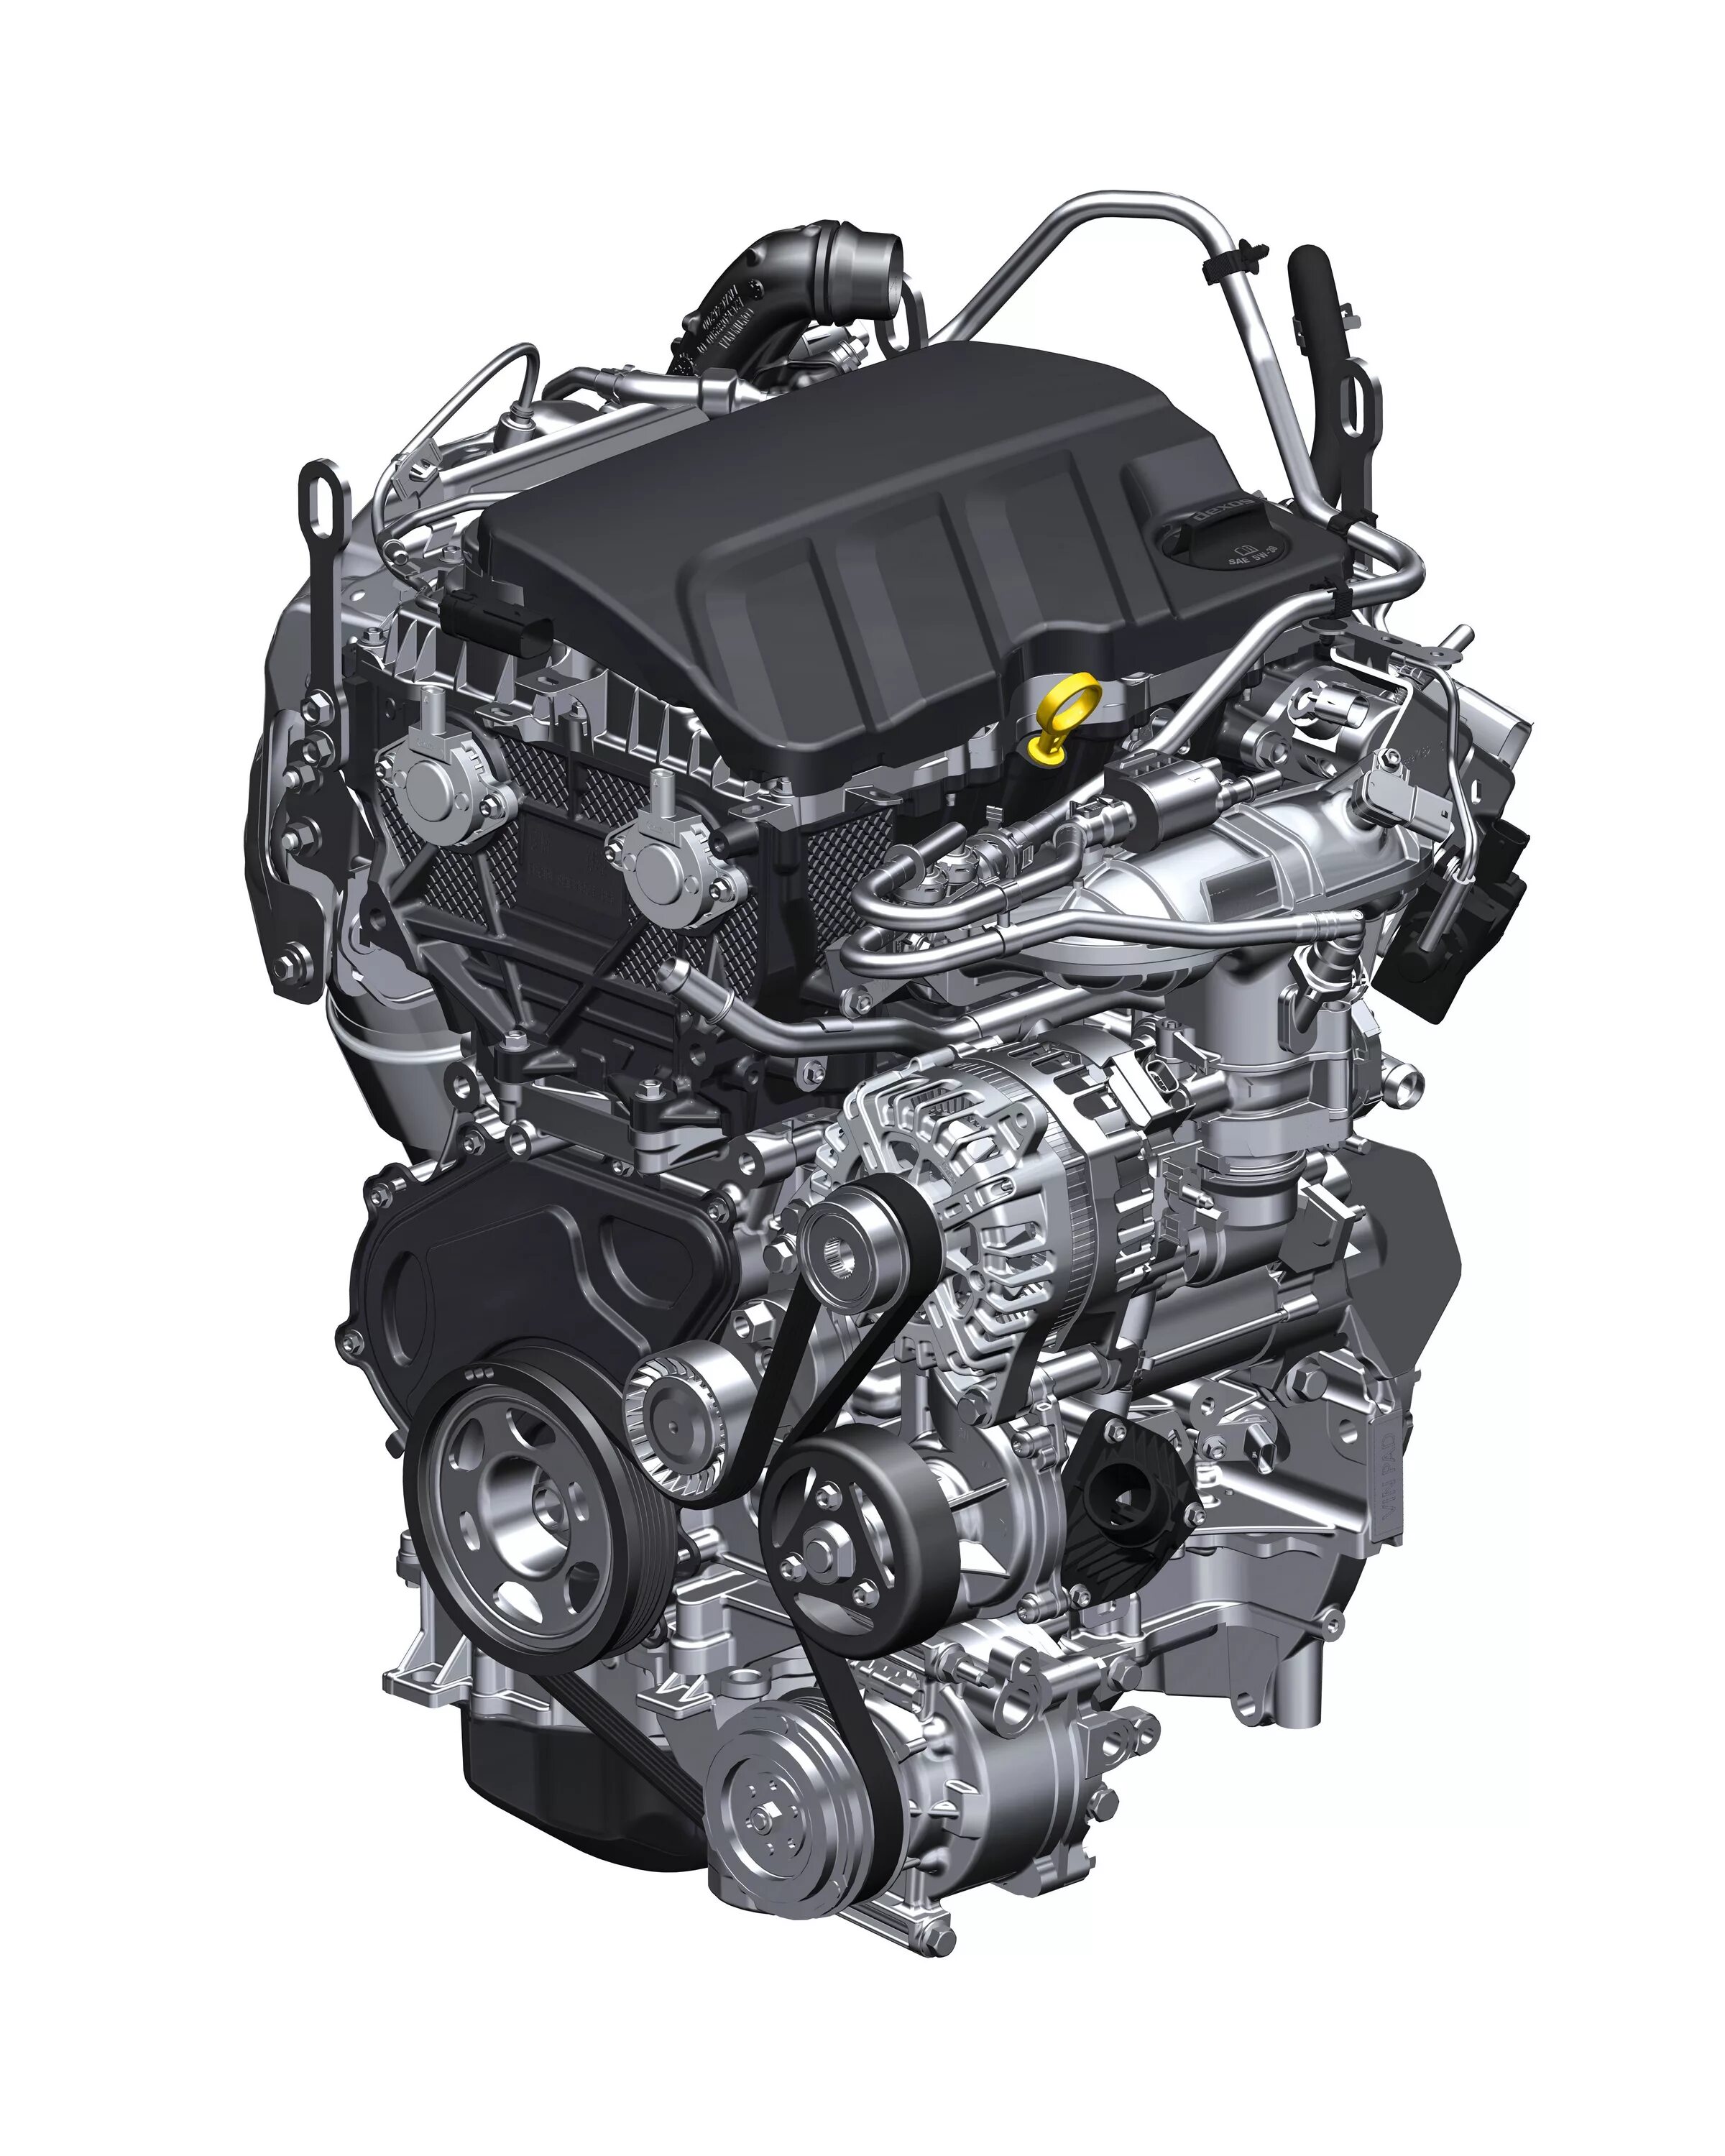 Opel Astra k 1.2 Turbo. Opel Astra k двигателя Опель. Opel Motor 1.2. Двигатель 1,4 Opel Astra k.